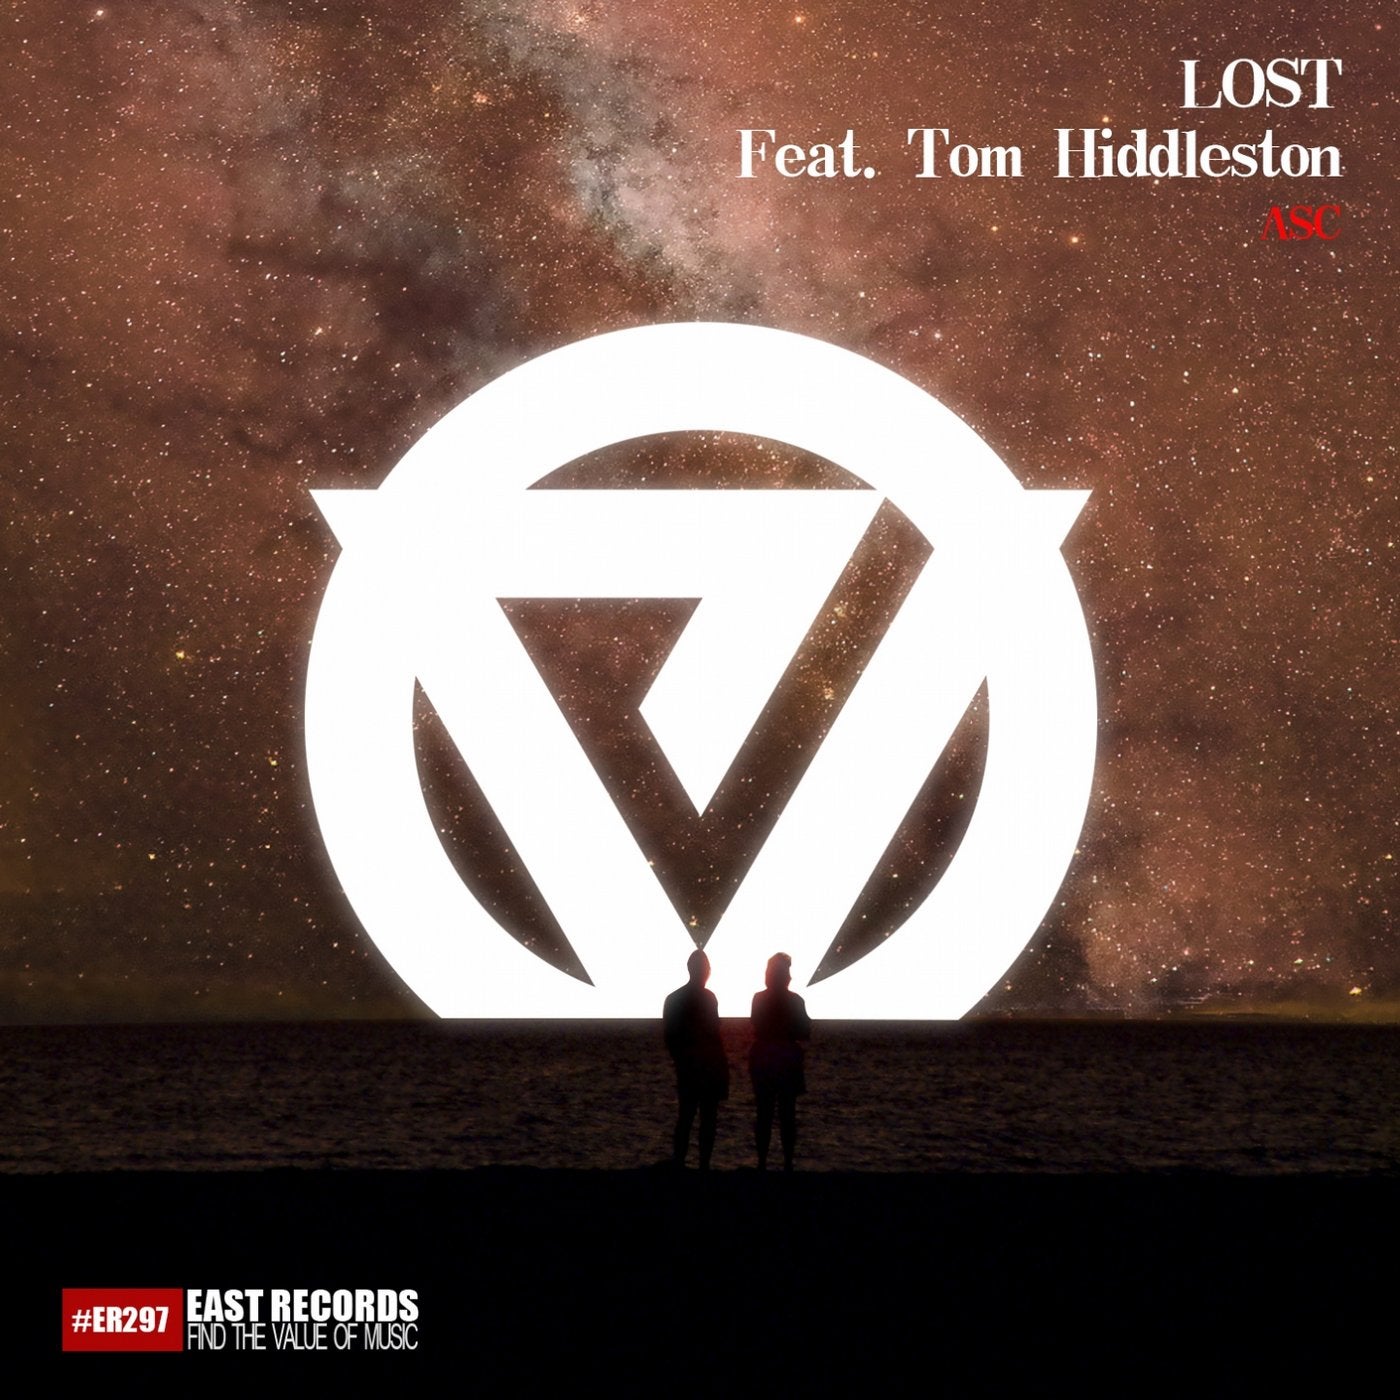 Lost (feat. Tom Hiddleston)